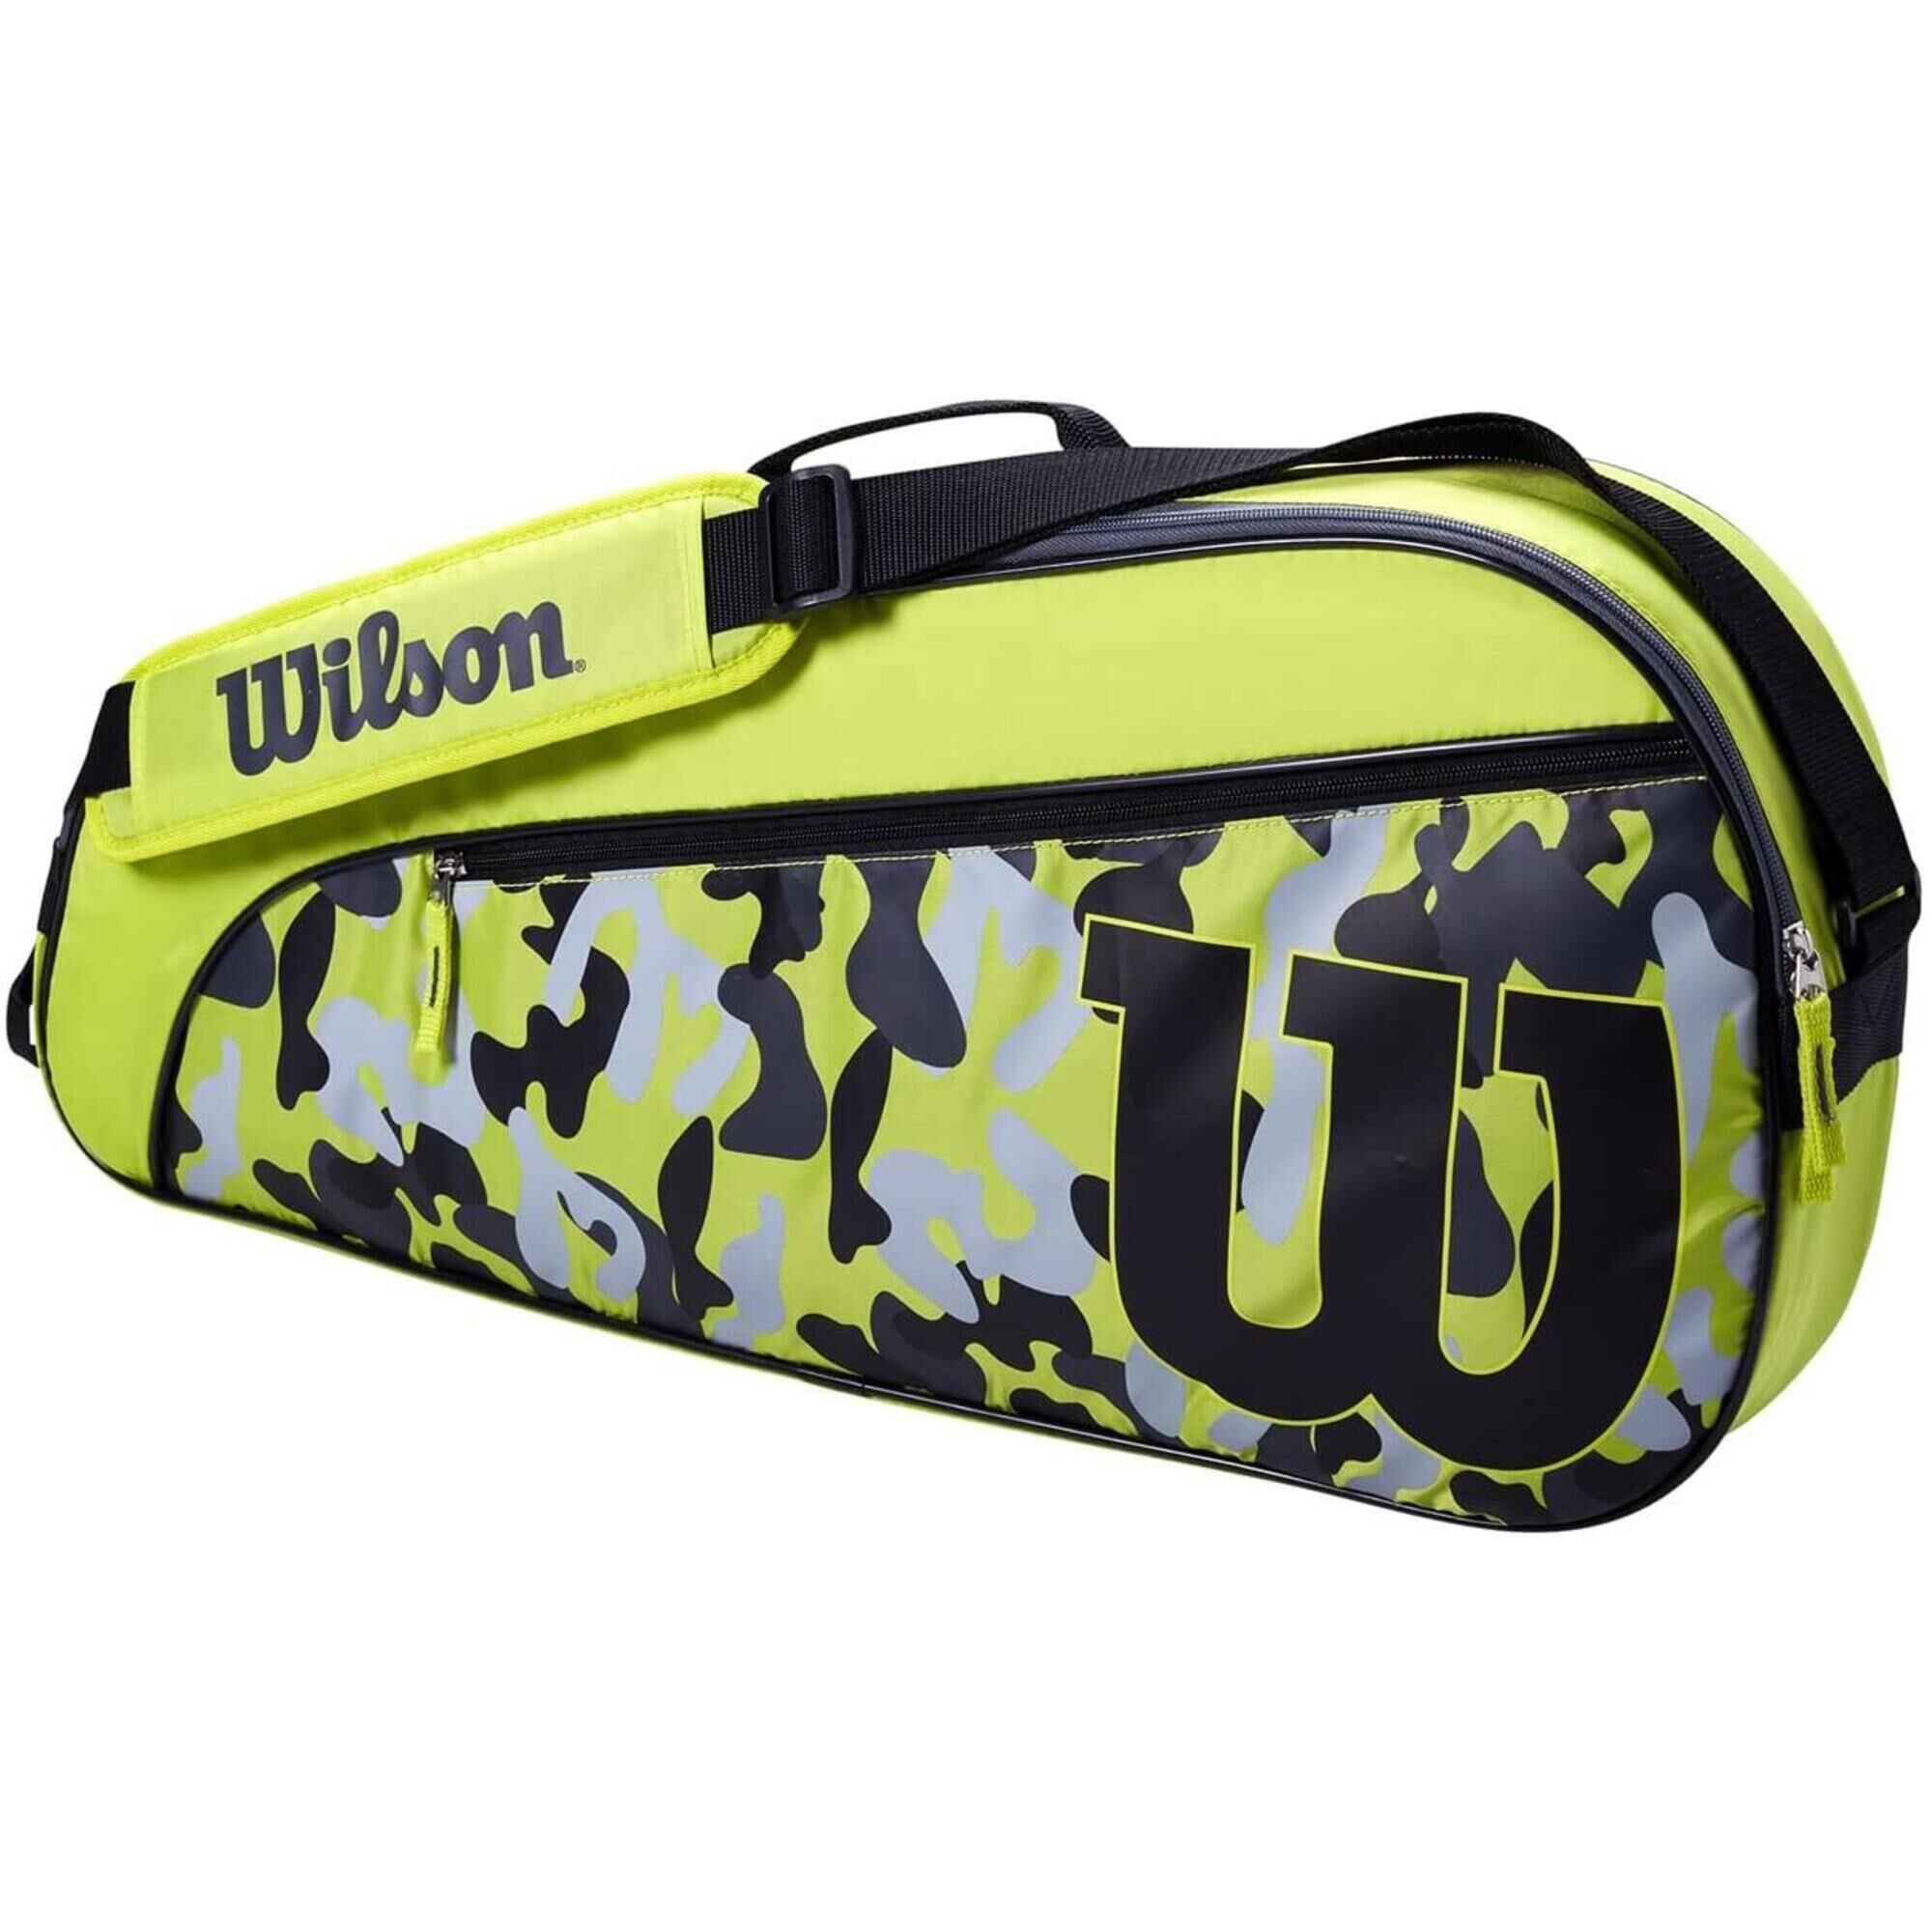 WILSON Wilson Camo Lime/Grey 3 Tennis Racket Bag